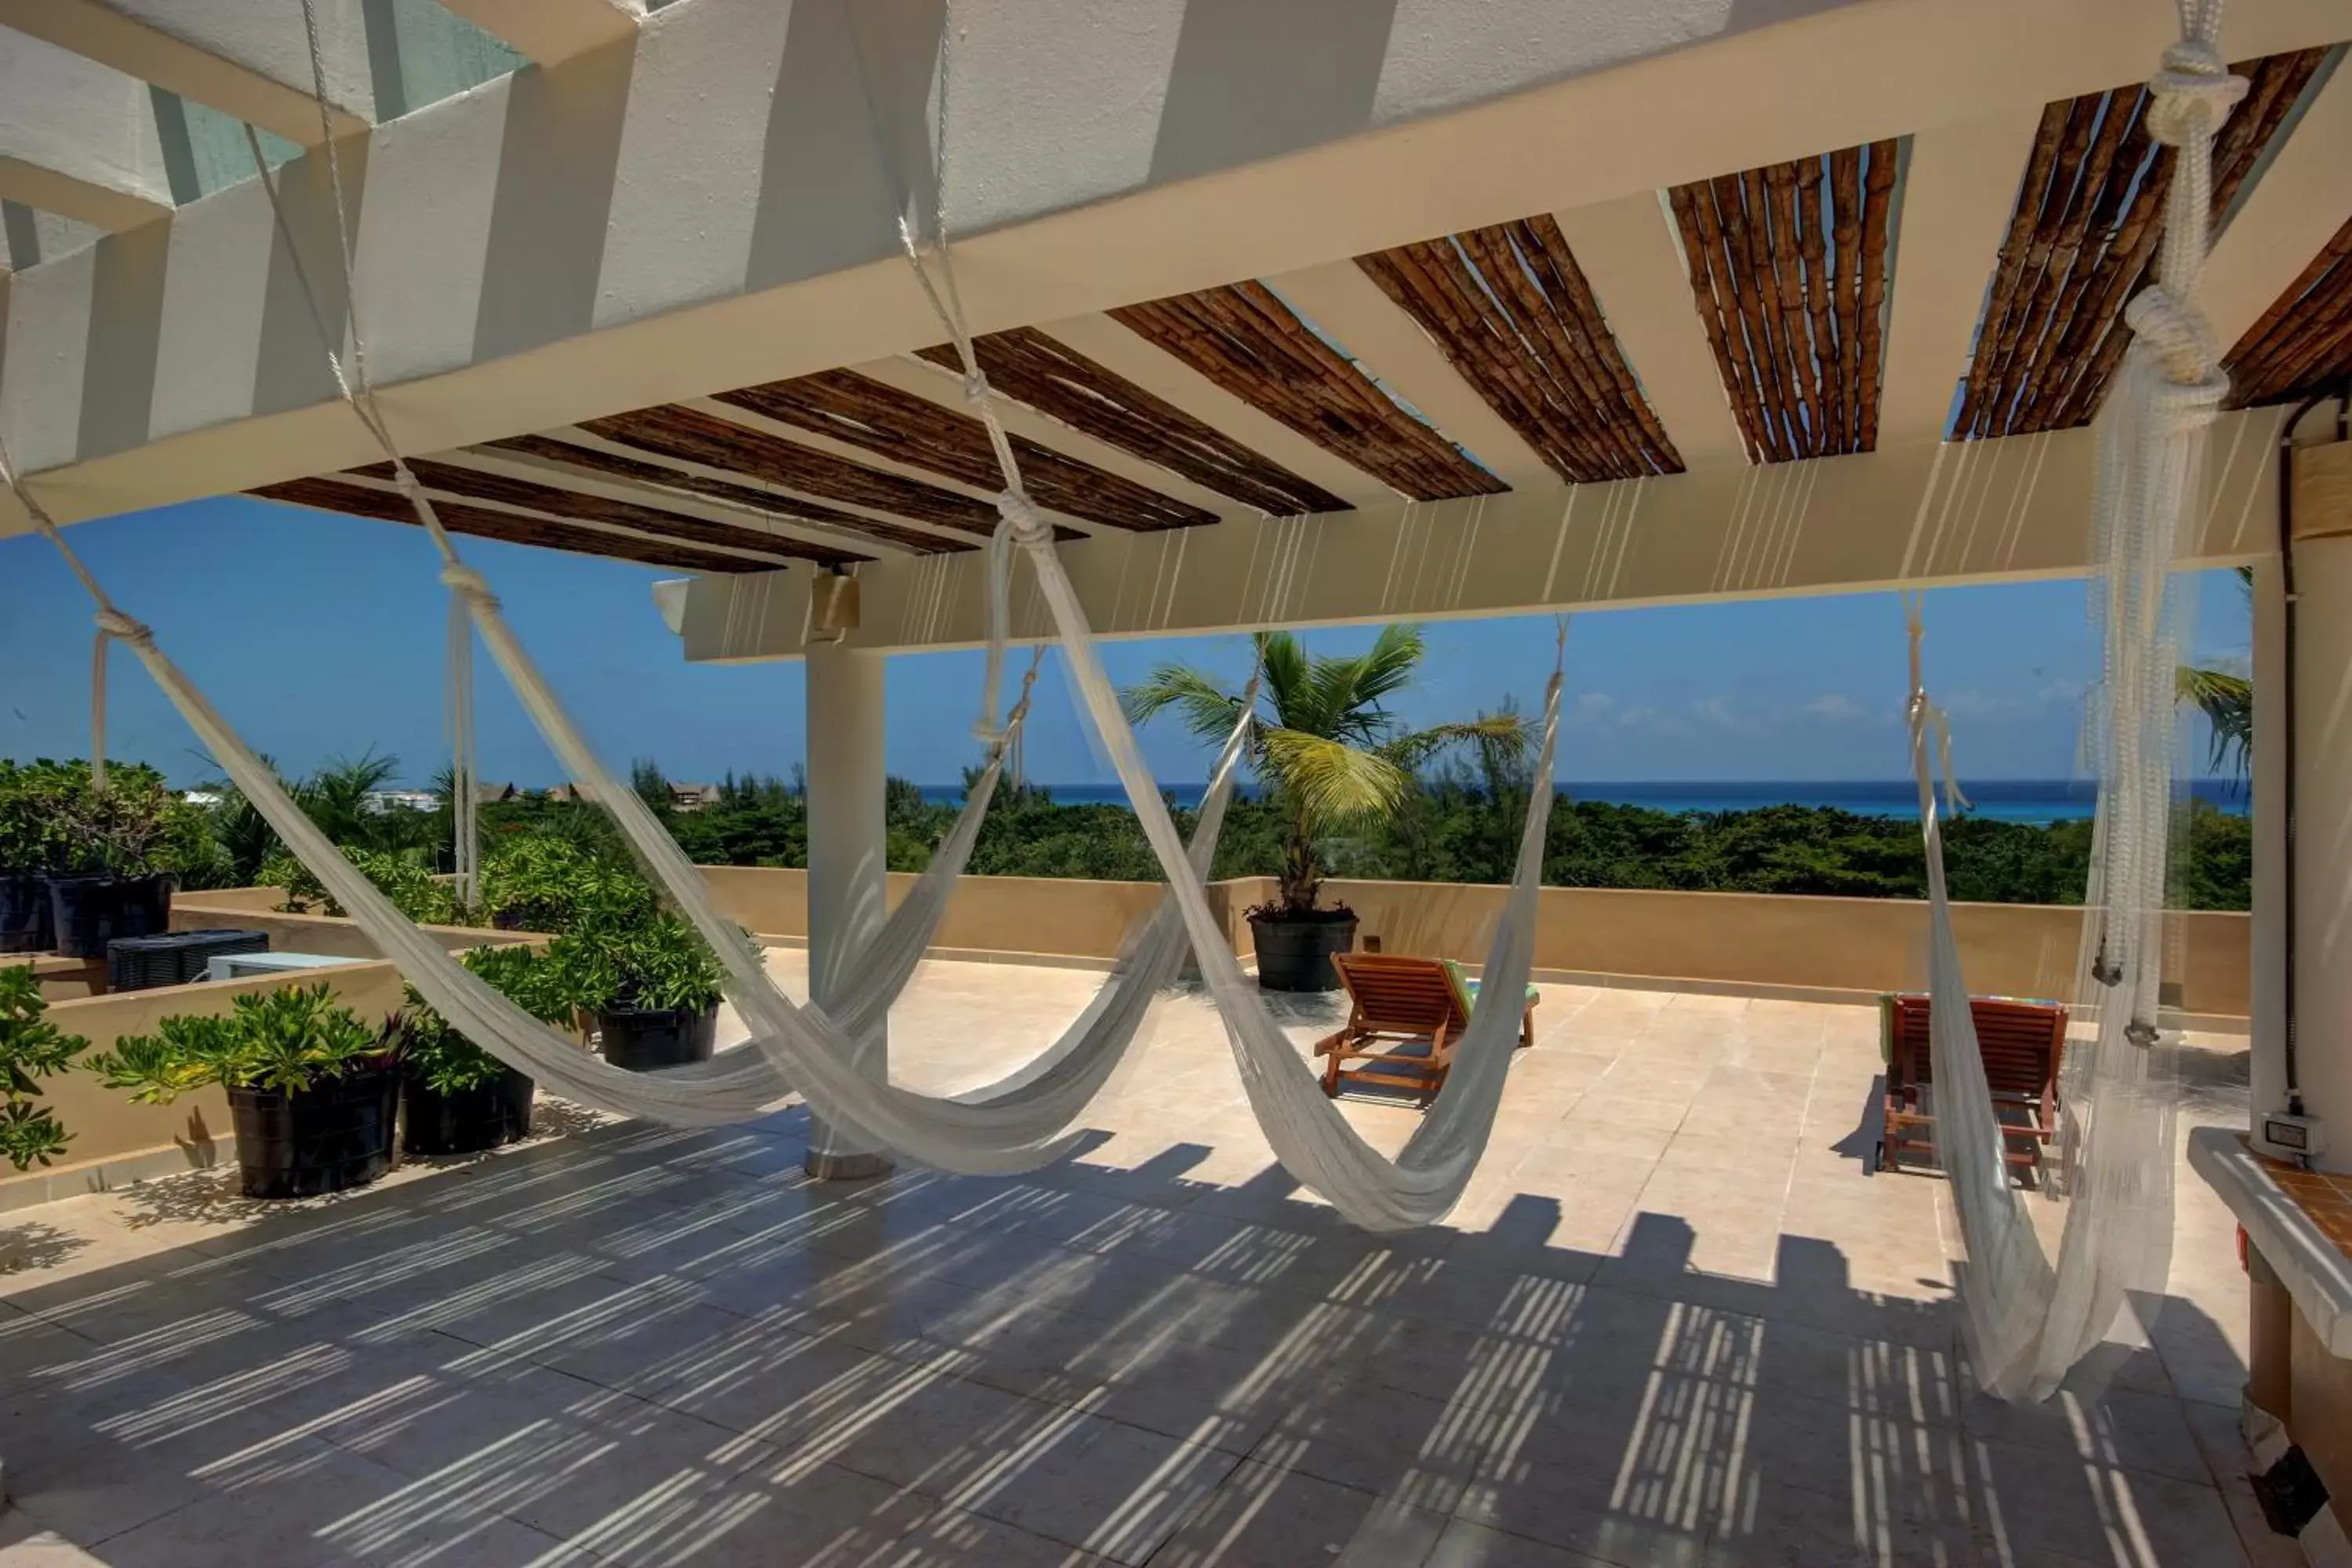 Area and facilities in Riviera Maya Suites